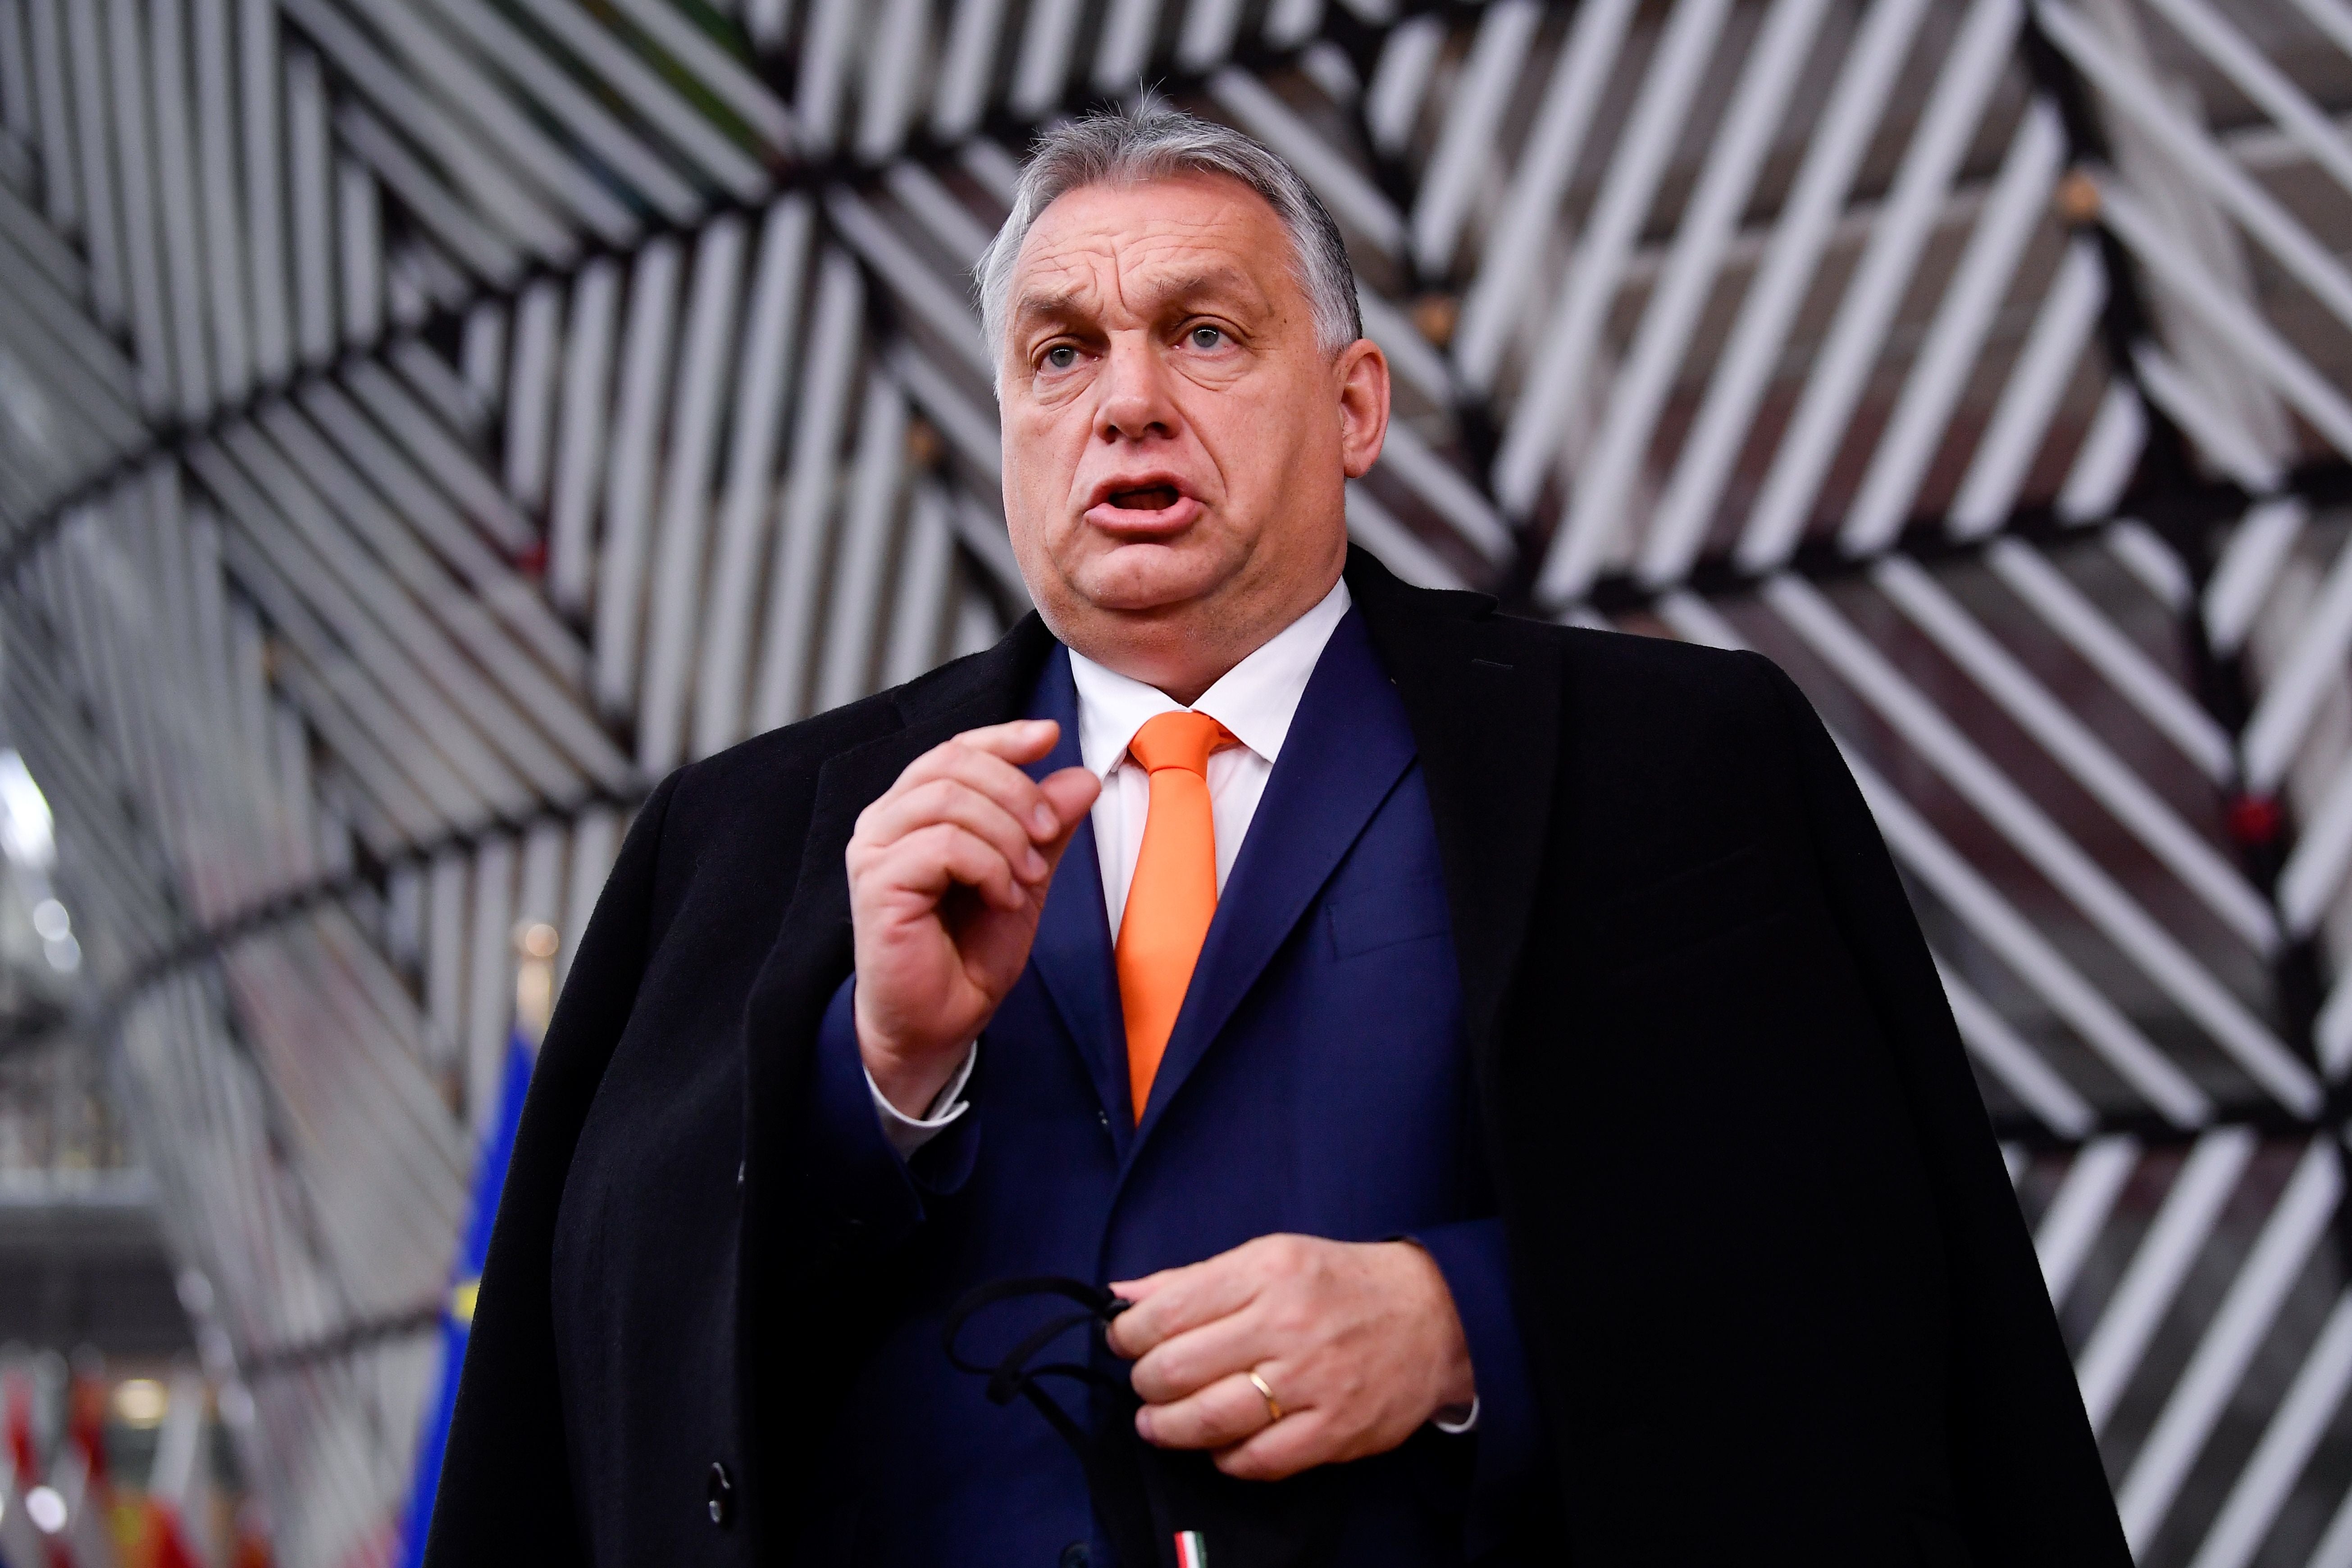 Orban has been outspoken against non-European influences [file photo]